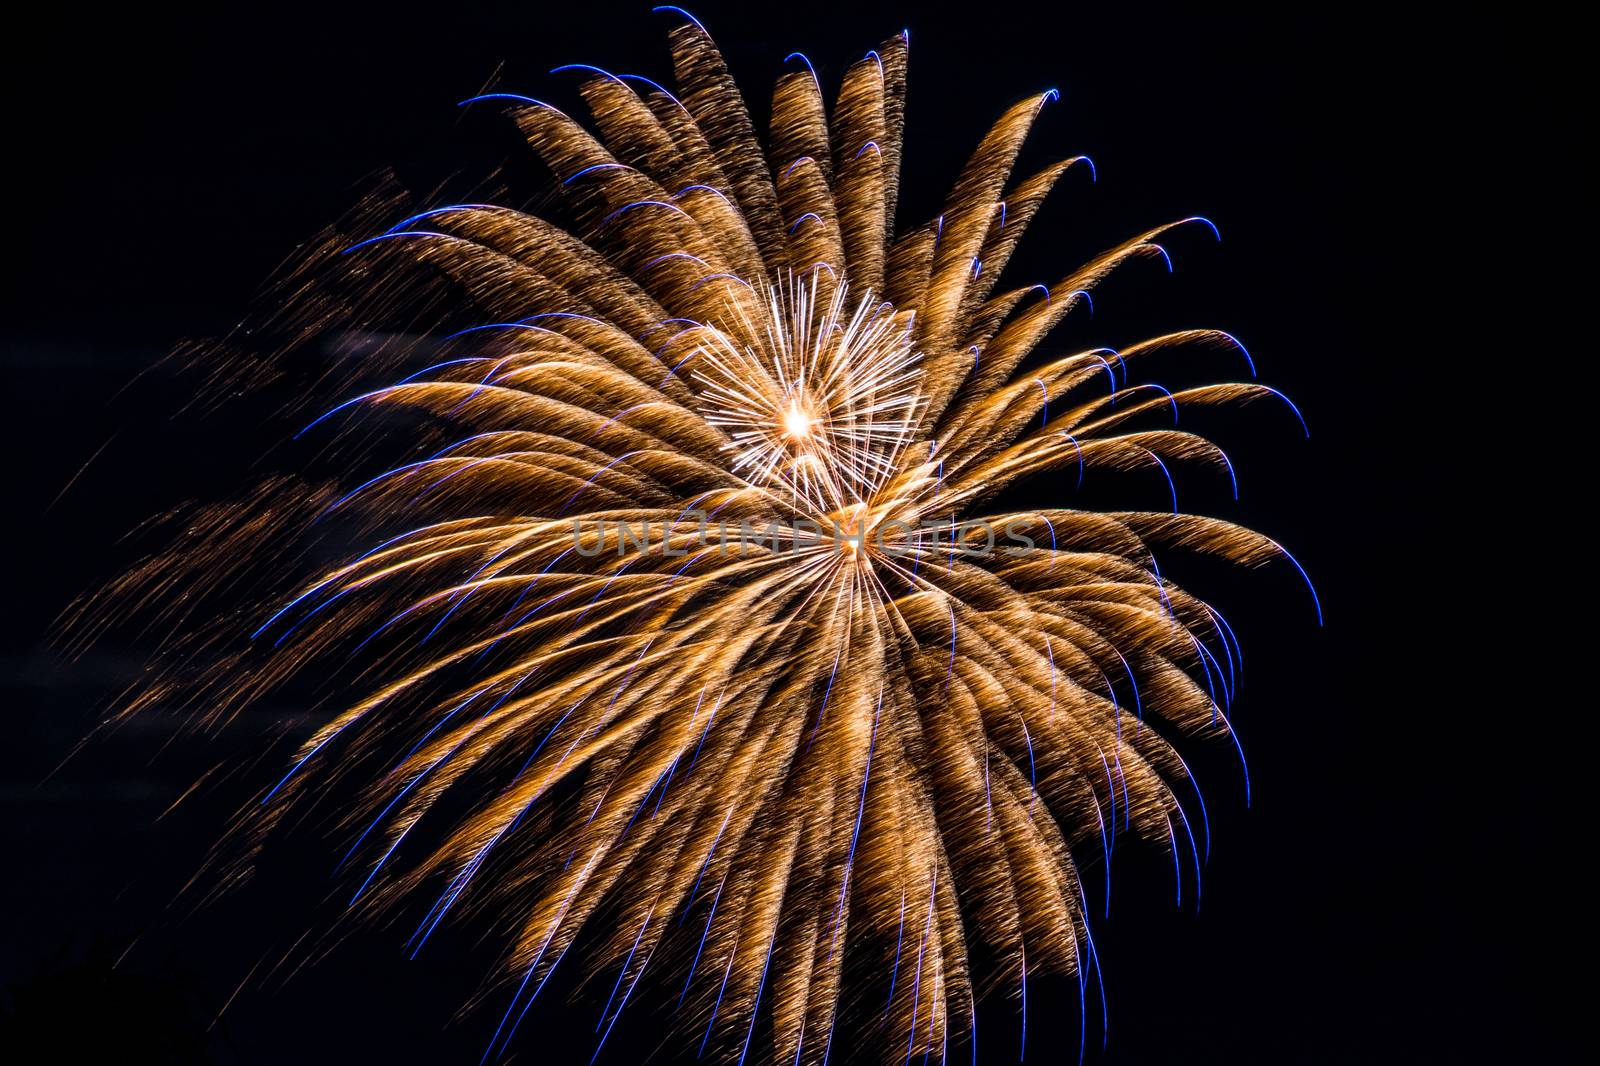 Firework fireworks celebration blue spikes gold white blasts by MXW_Stock